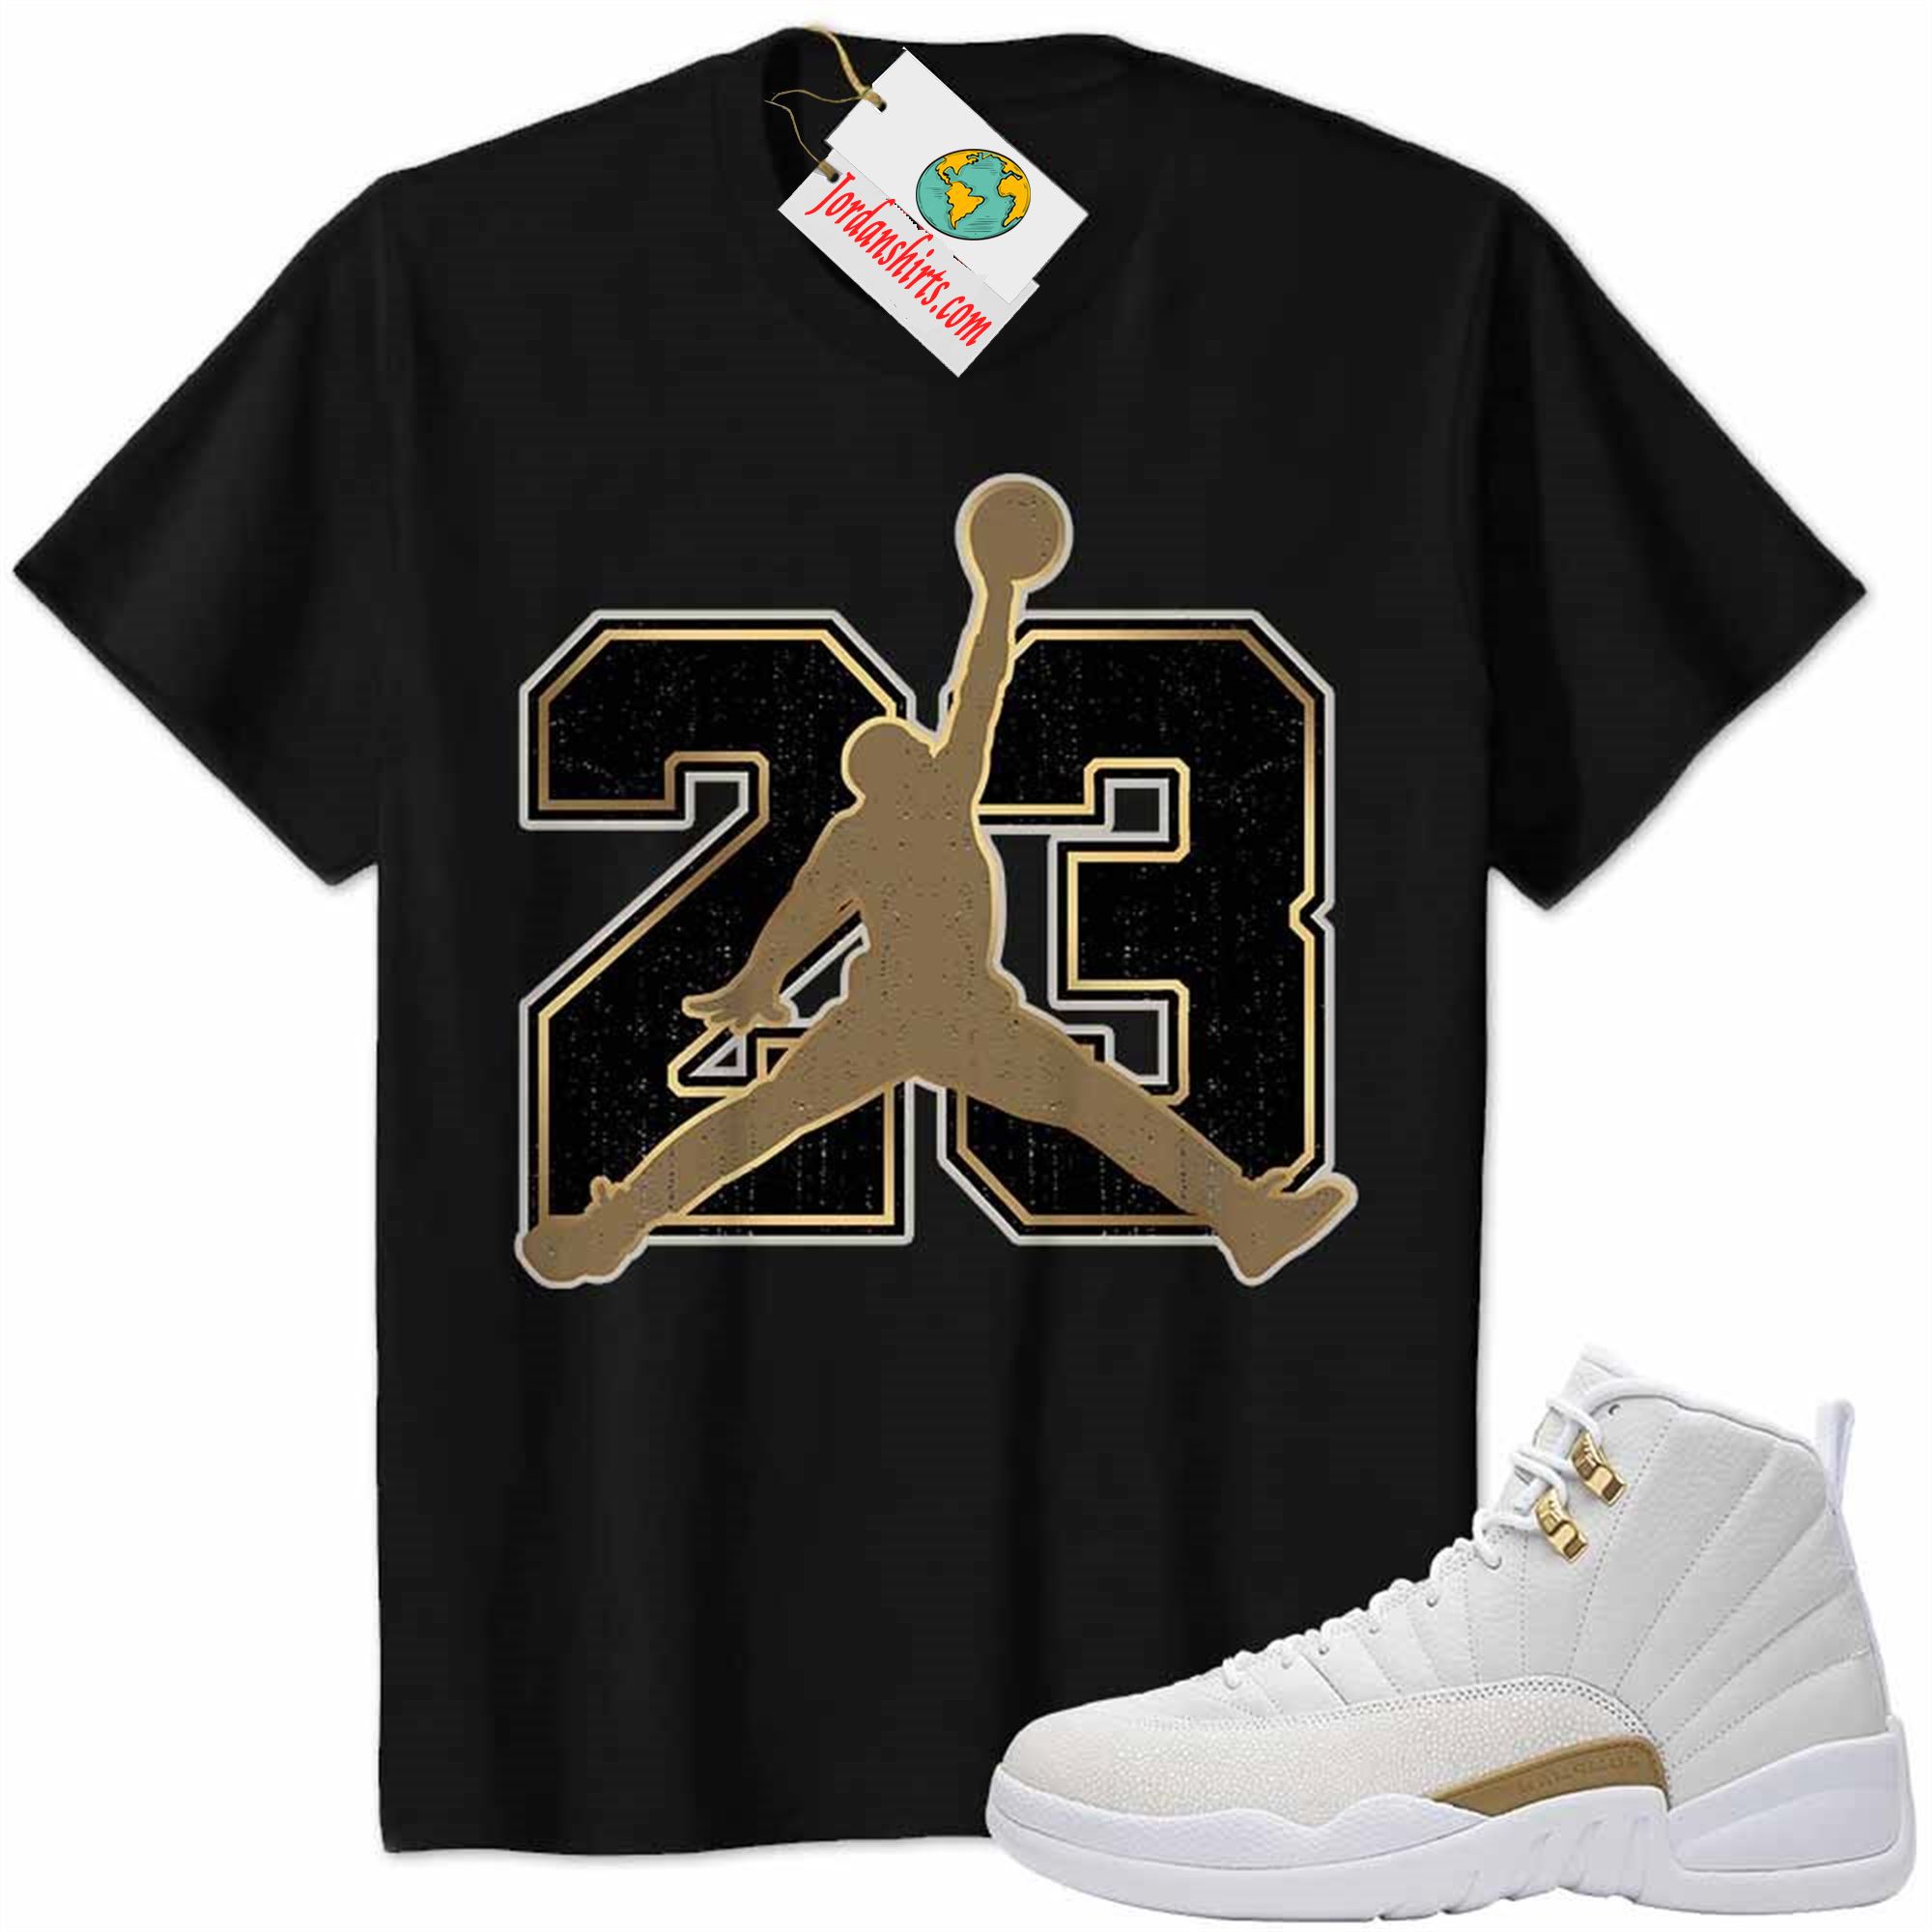 Jordan 12 Shirt, Jordan 12 Ovo Shirt Jumpman No23 Black Full Size Up To 5xl